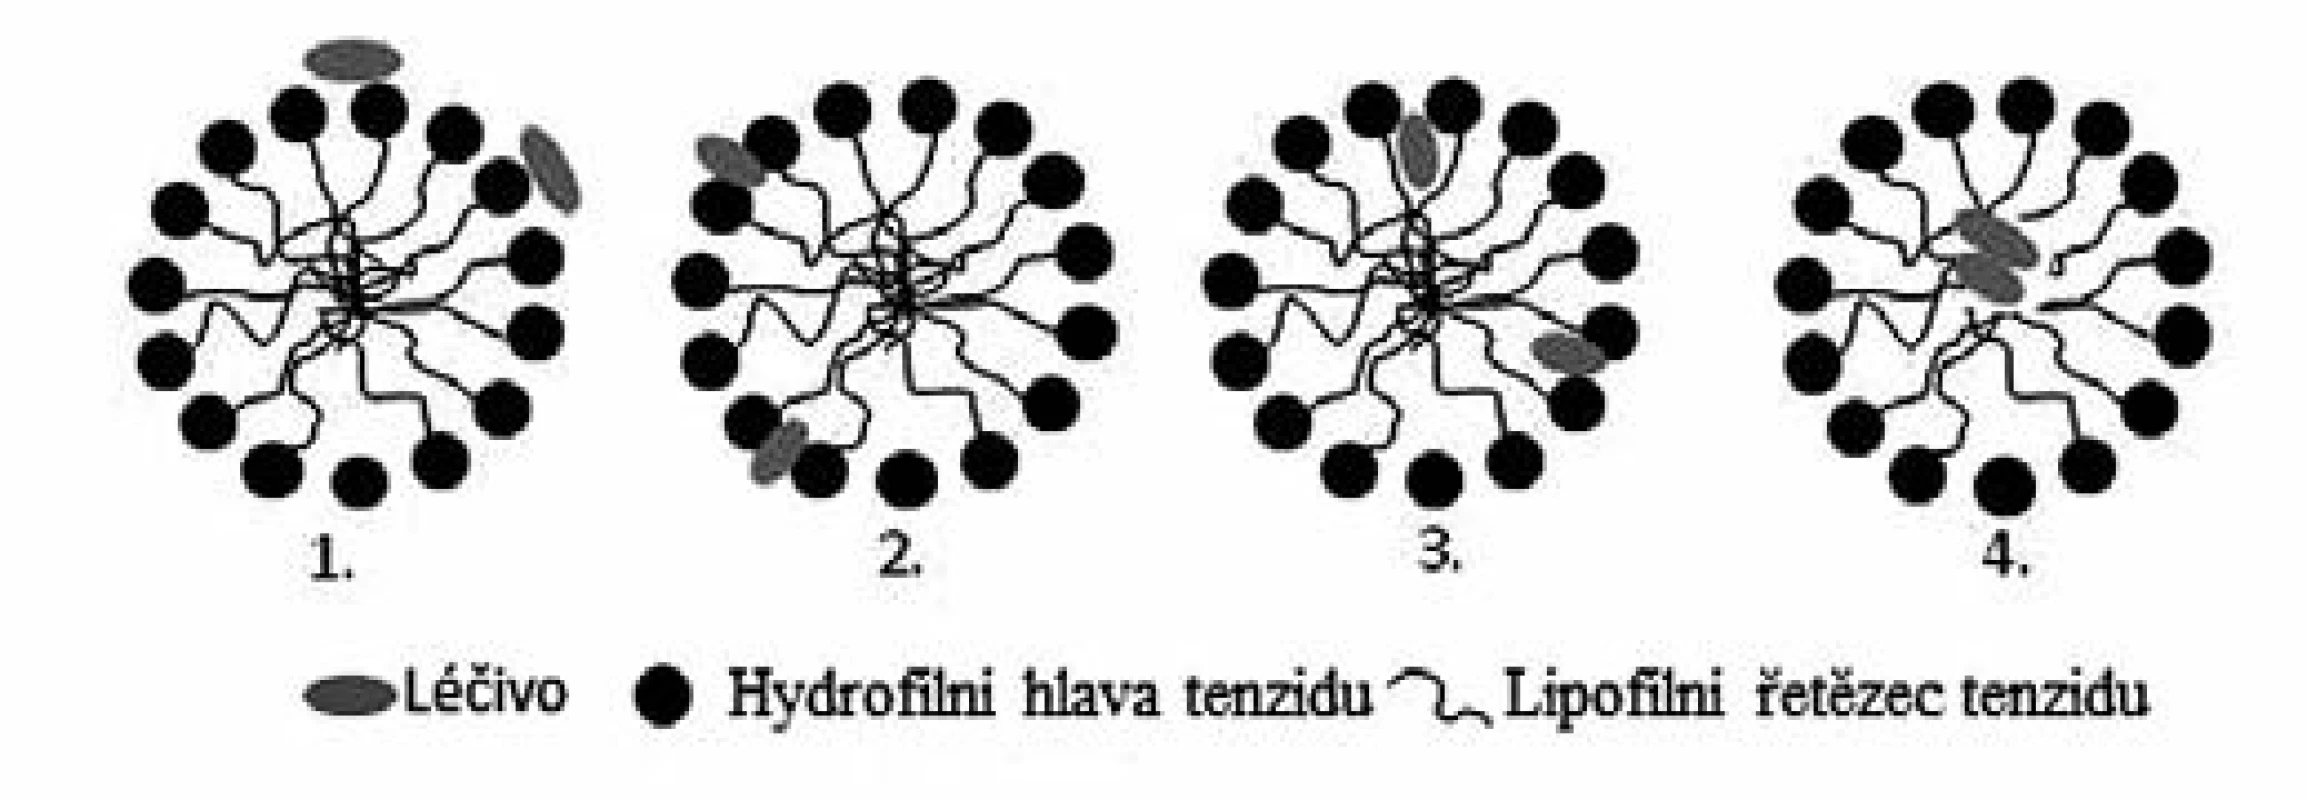 Možnosti inkorporace léčiva do micel tenzidu&lt;sup&gt;14)&lt;/sup&gt;